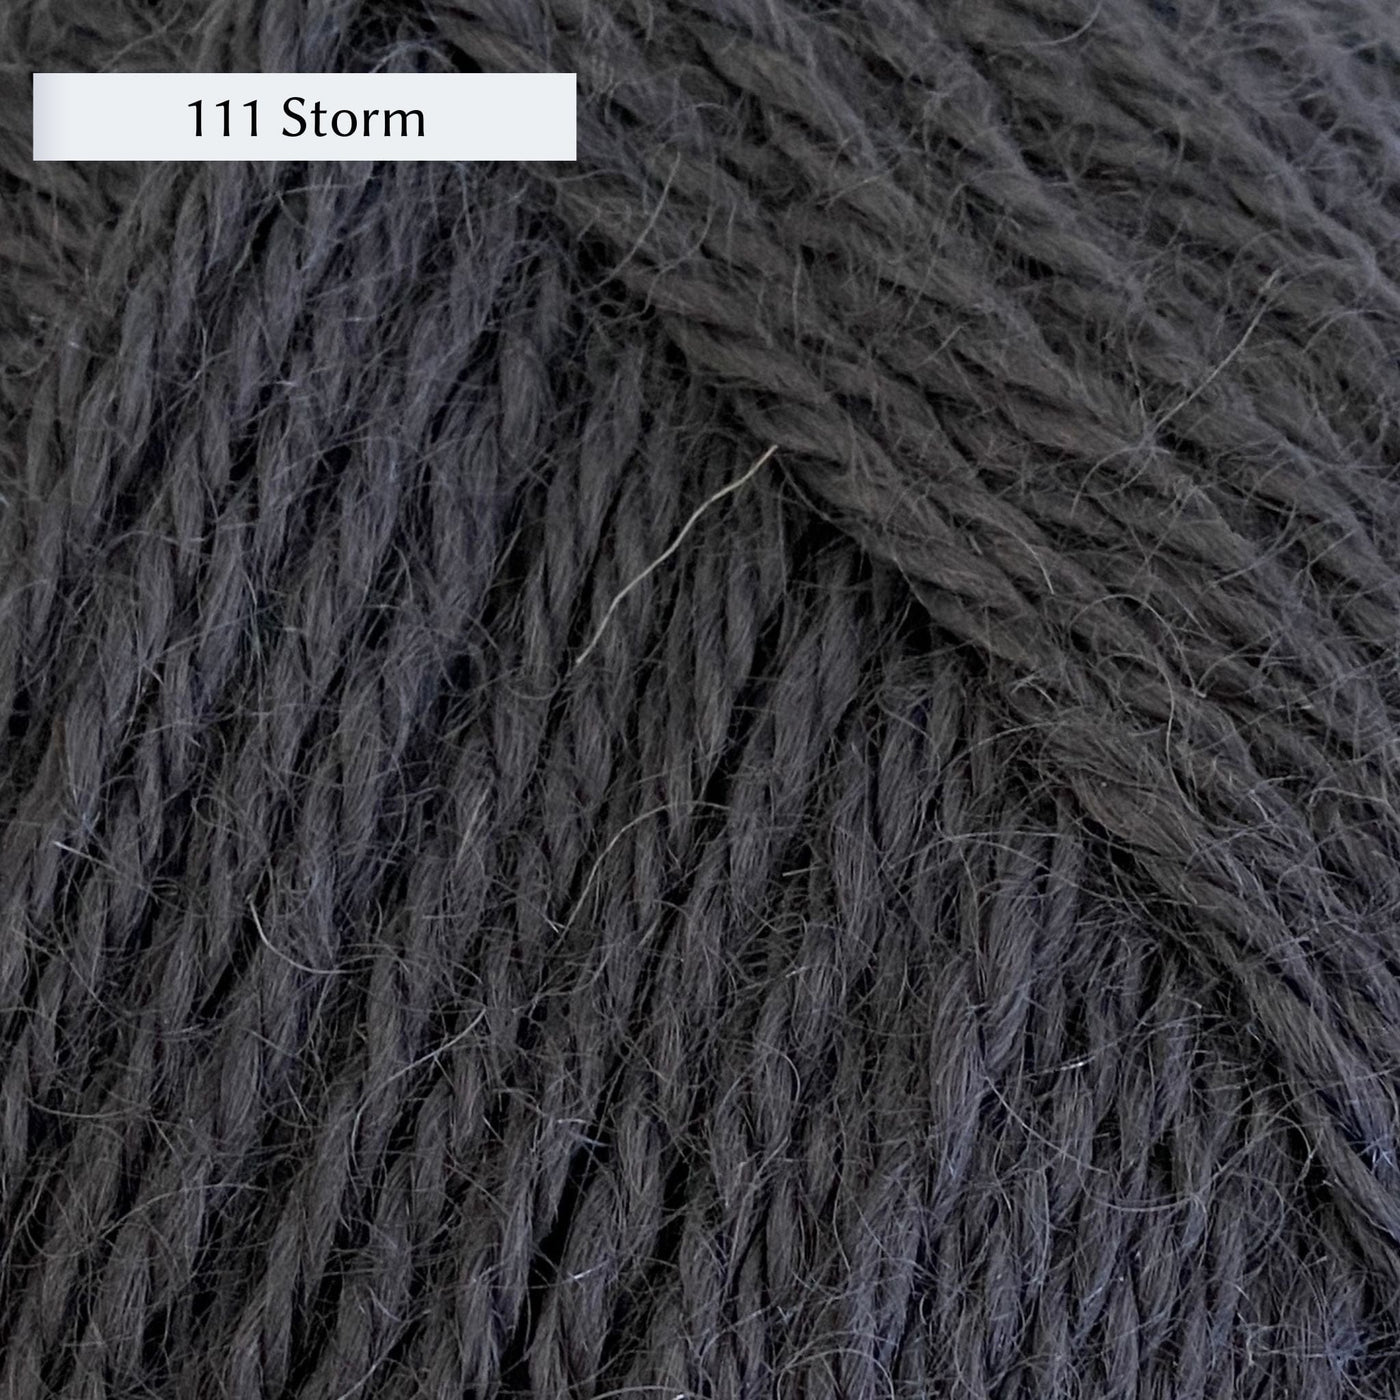 Wensleydale Longwool Aran, an aran weight yarn made from Wensleydale sheep, in color 111 Storm, a dark solid grey